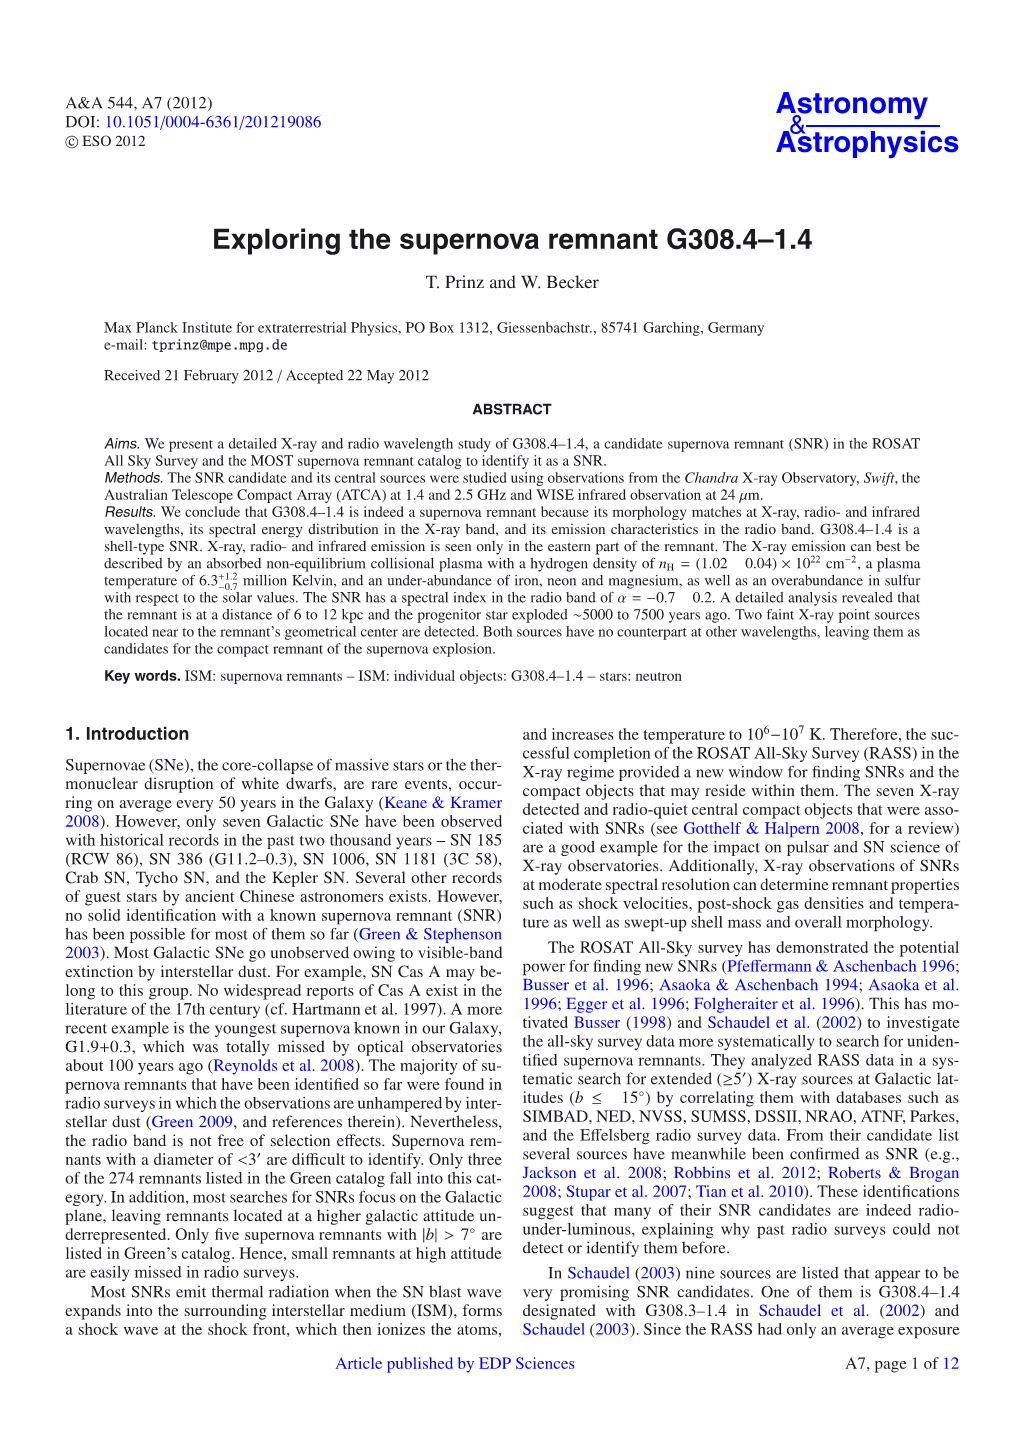 Exploring the Supernova Remnant G308.4–1.4